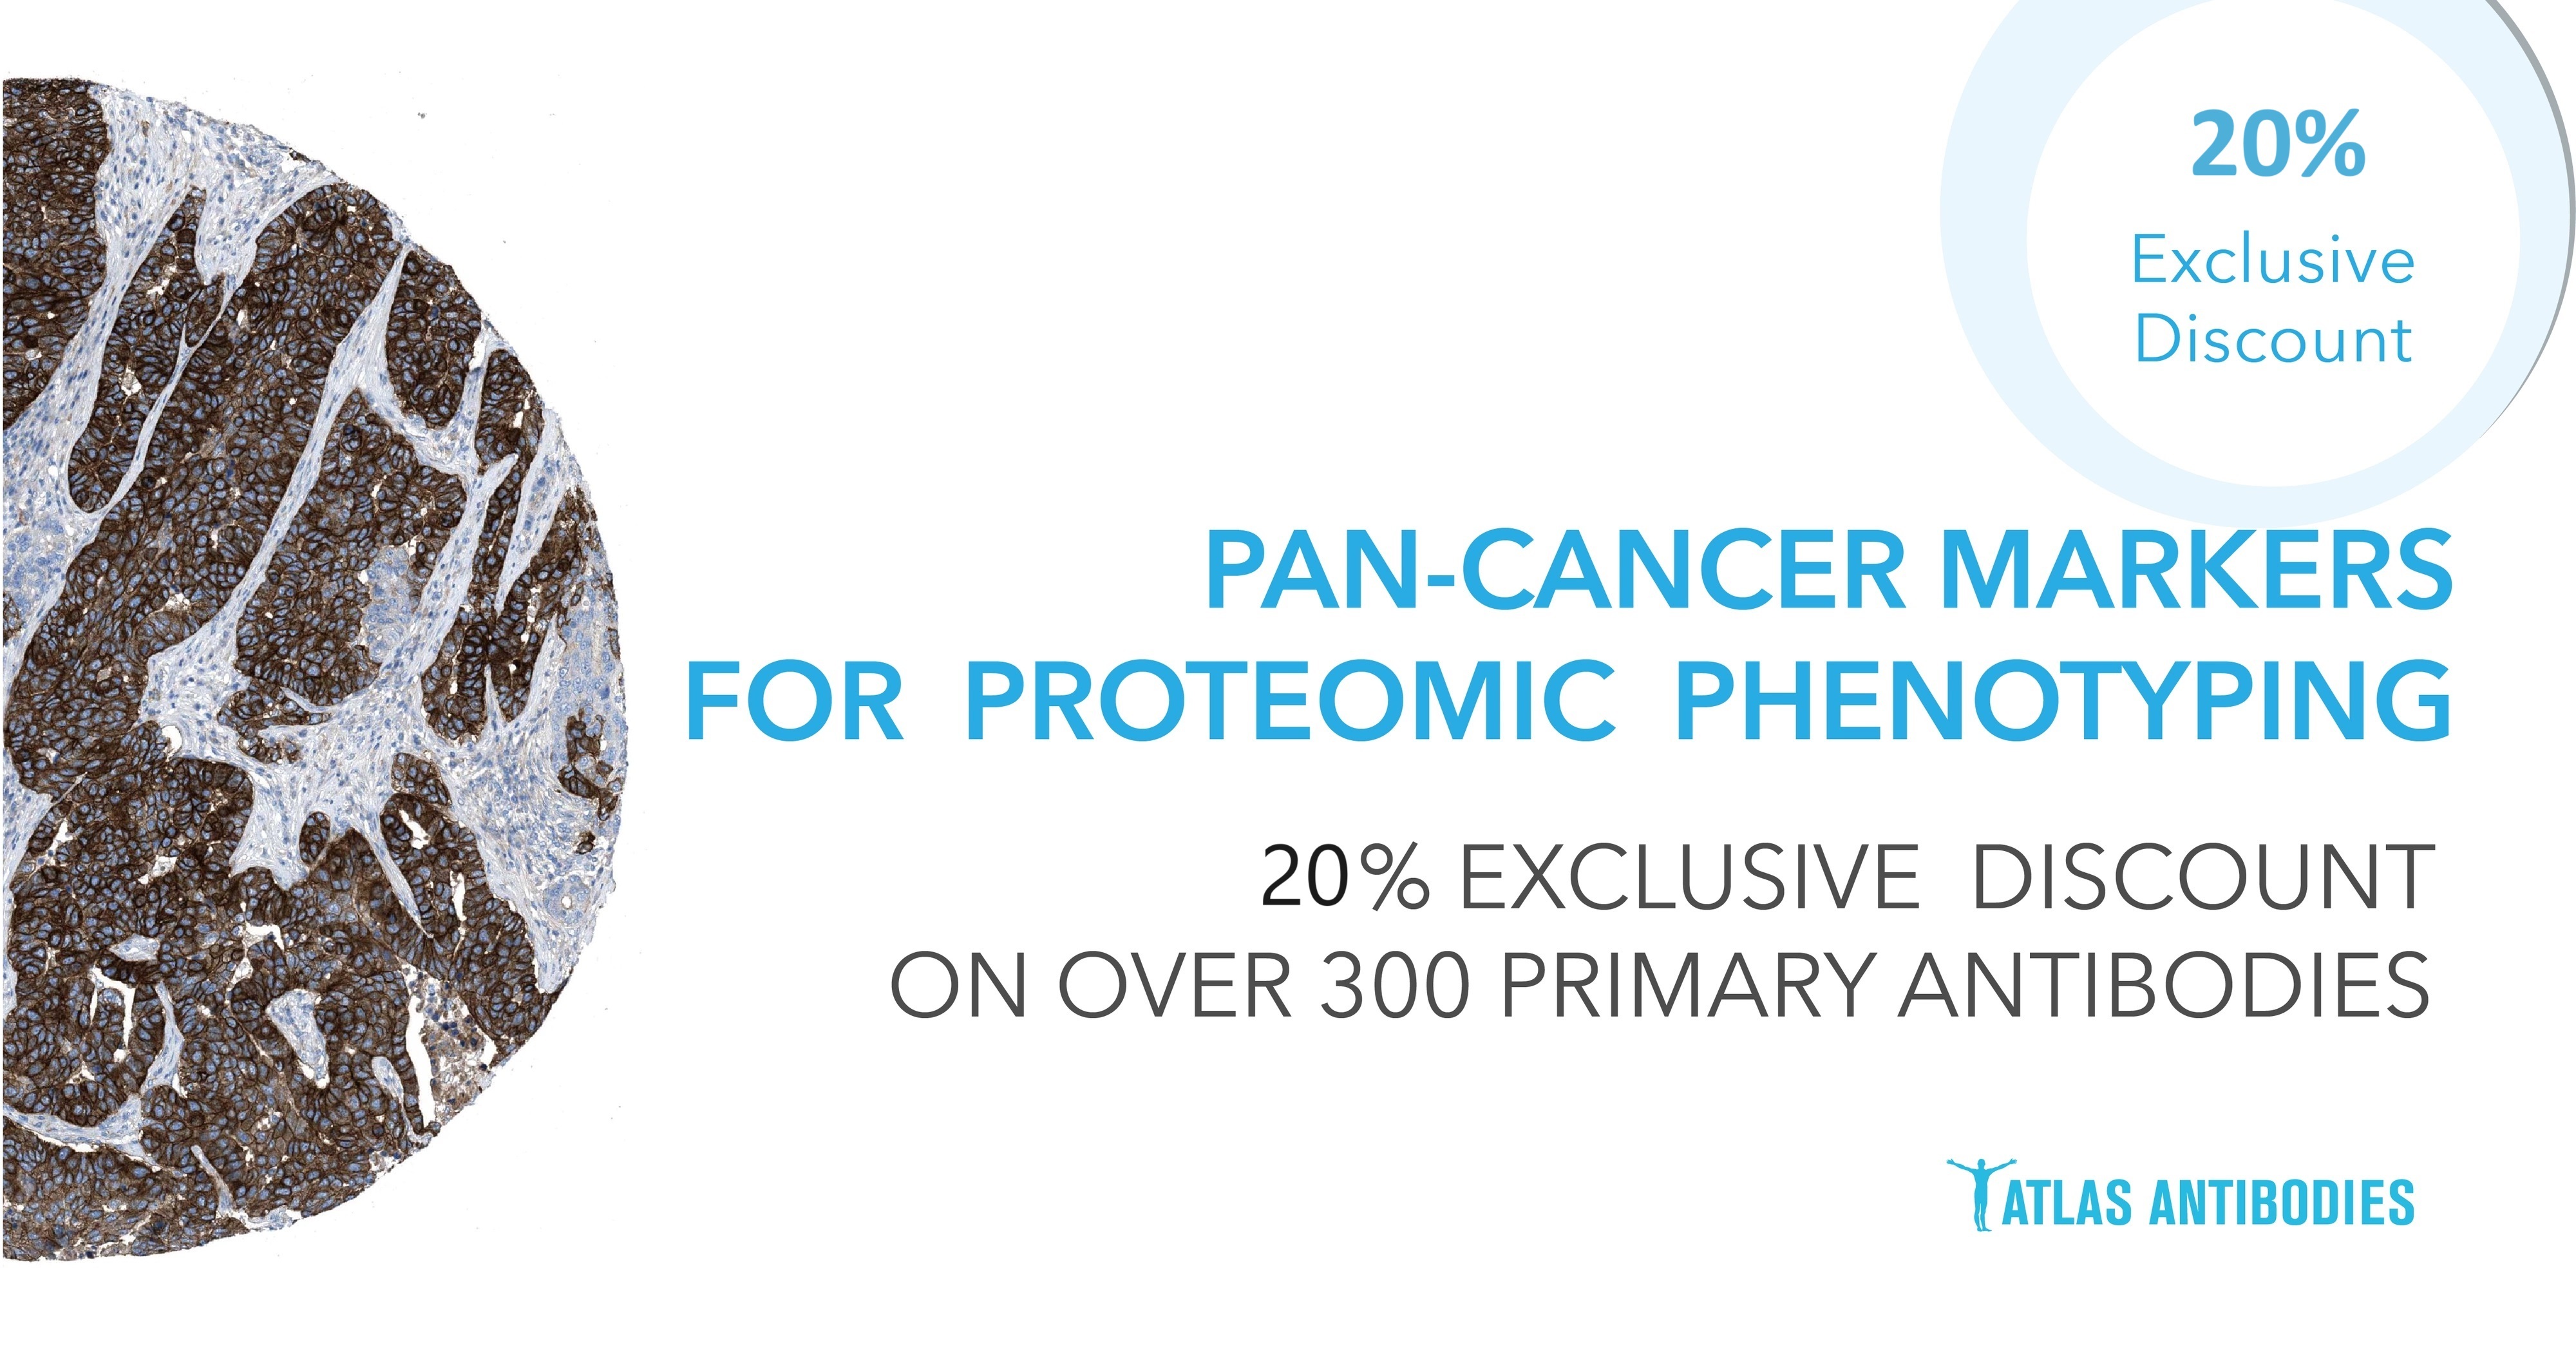 pan-cancer-campaign-visuals-atlas-antibodies-20-2.jpg